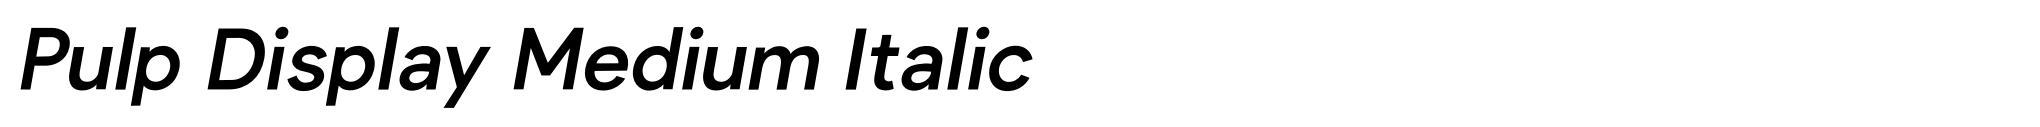 Pulp Display Medium Italic image